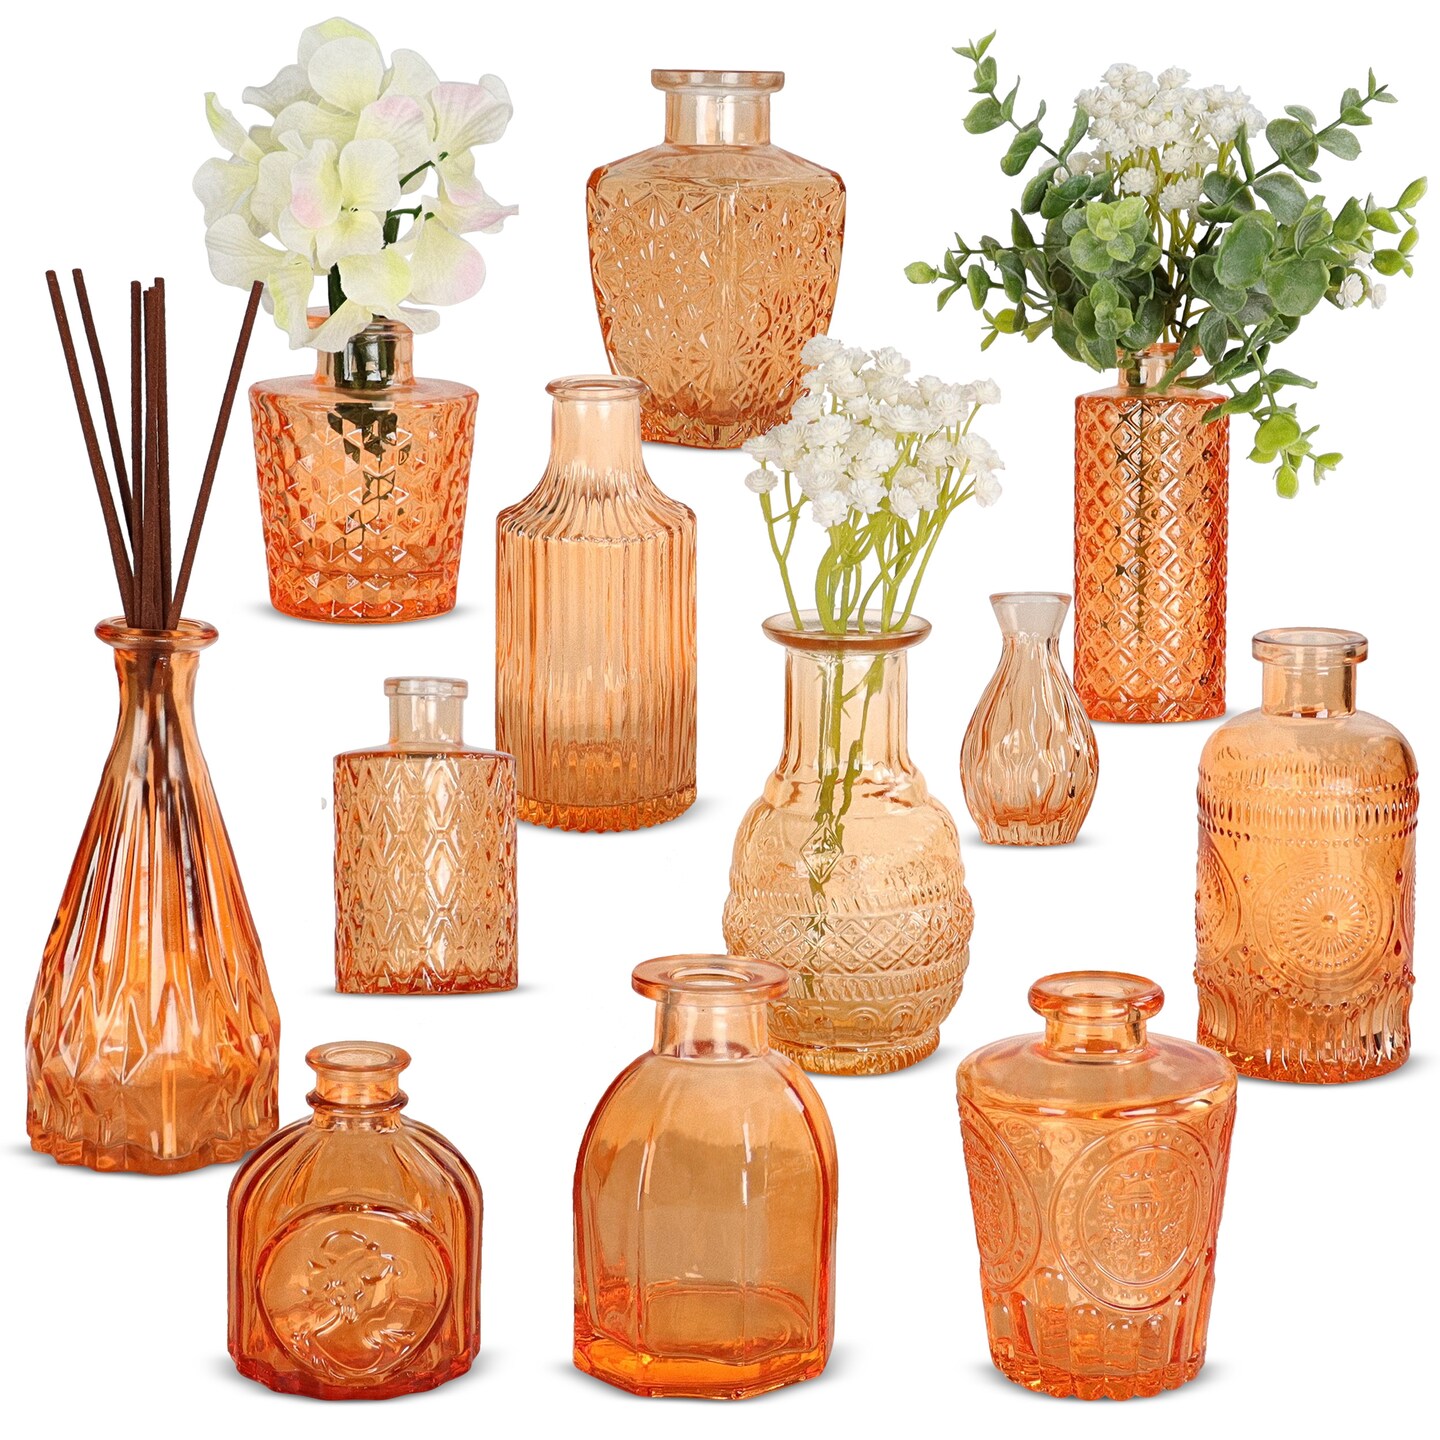 Spec101 Small Bud Vases for Flowers - 12pk Apricot Crush Mini Glass Bud Vase Set